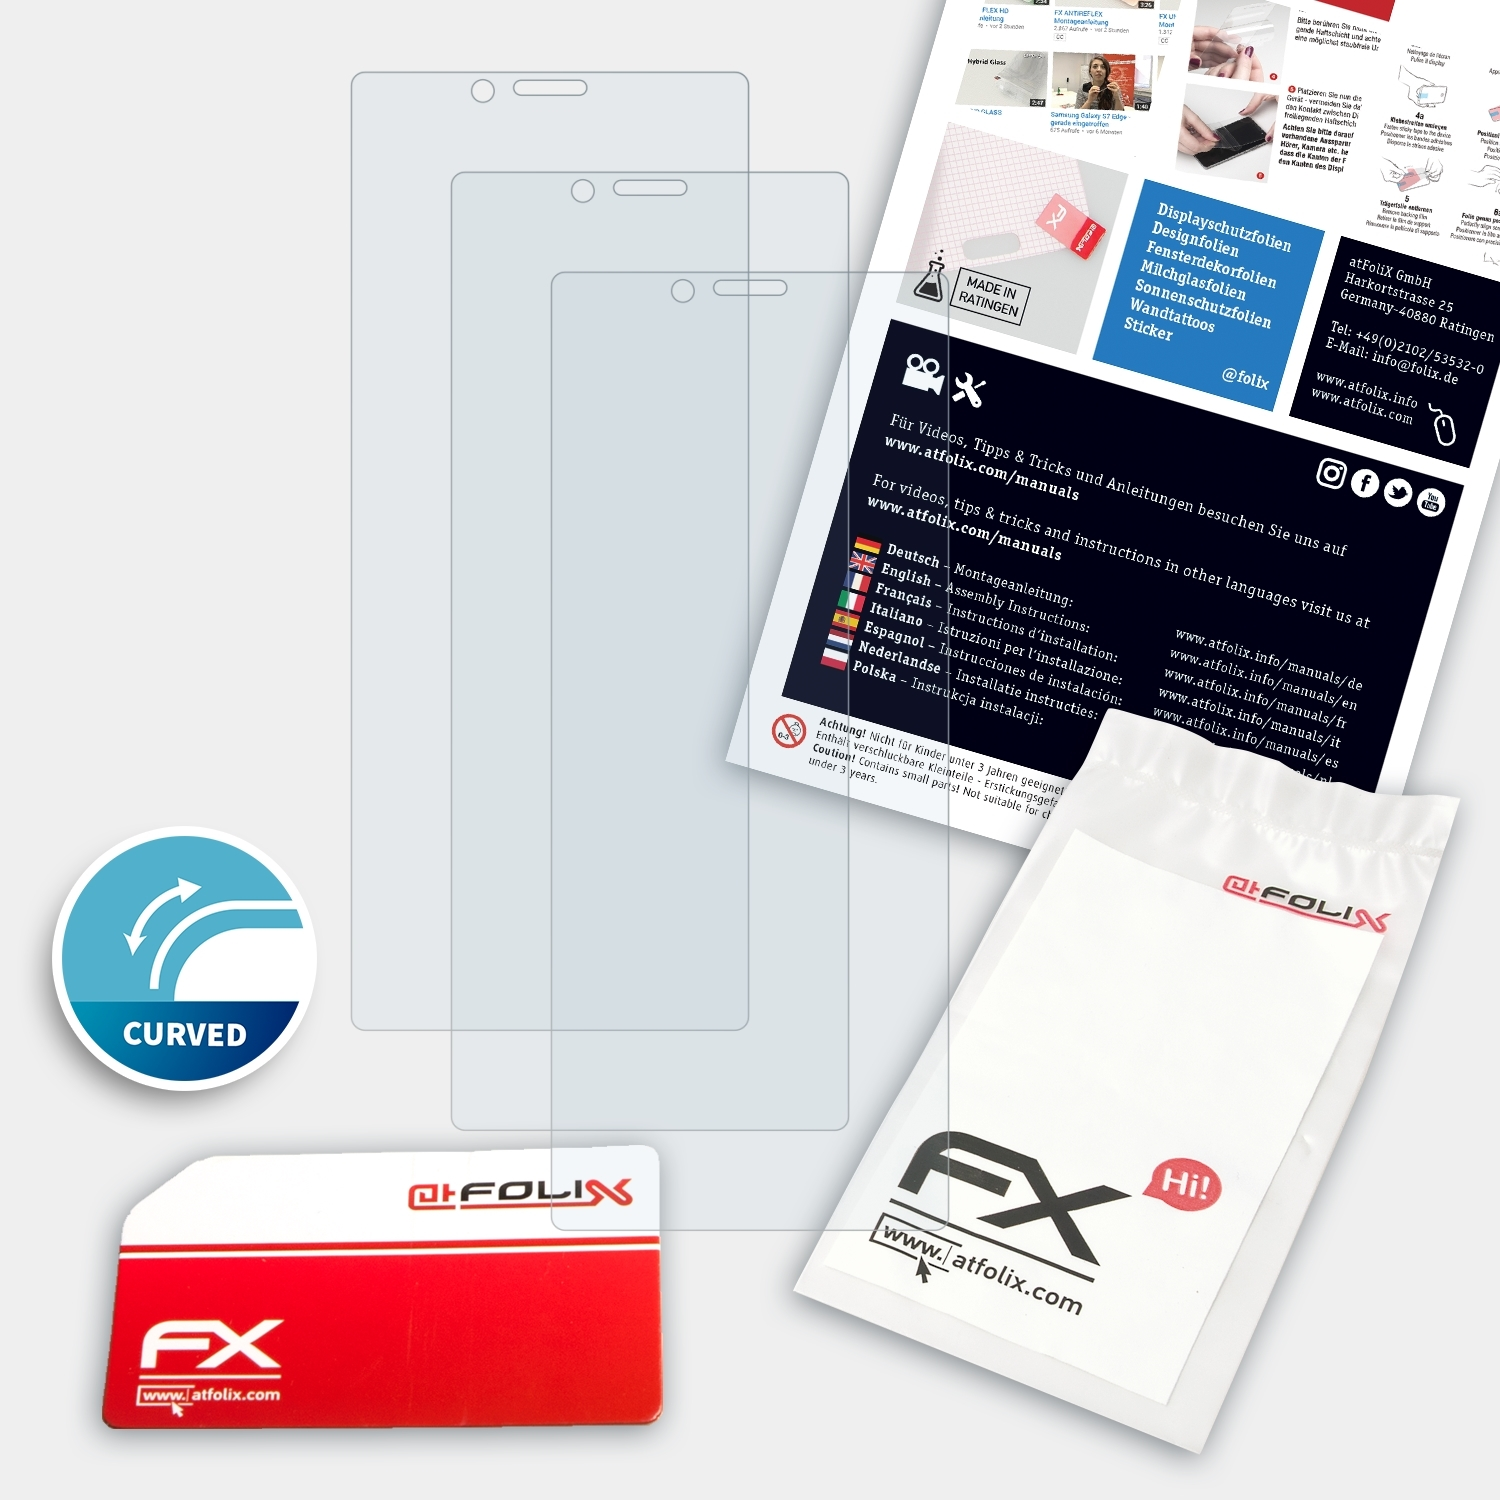 ATFOLIX 3x FX-ActiFleX Displayschutz(für Sony Xperia 1)